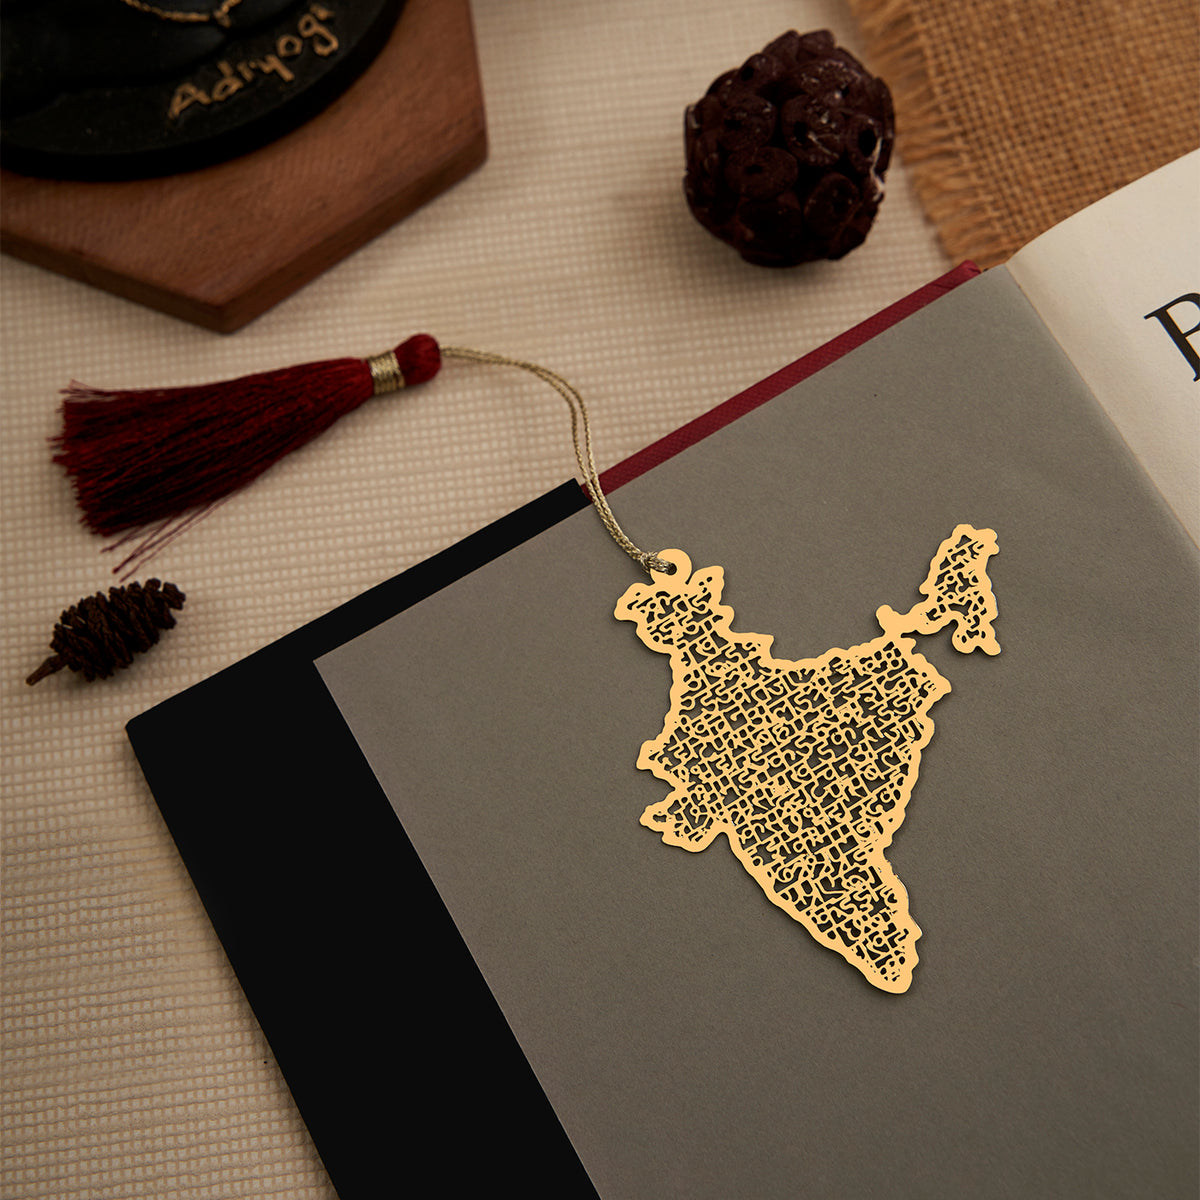 Brass India Map Design bookmark